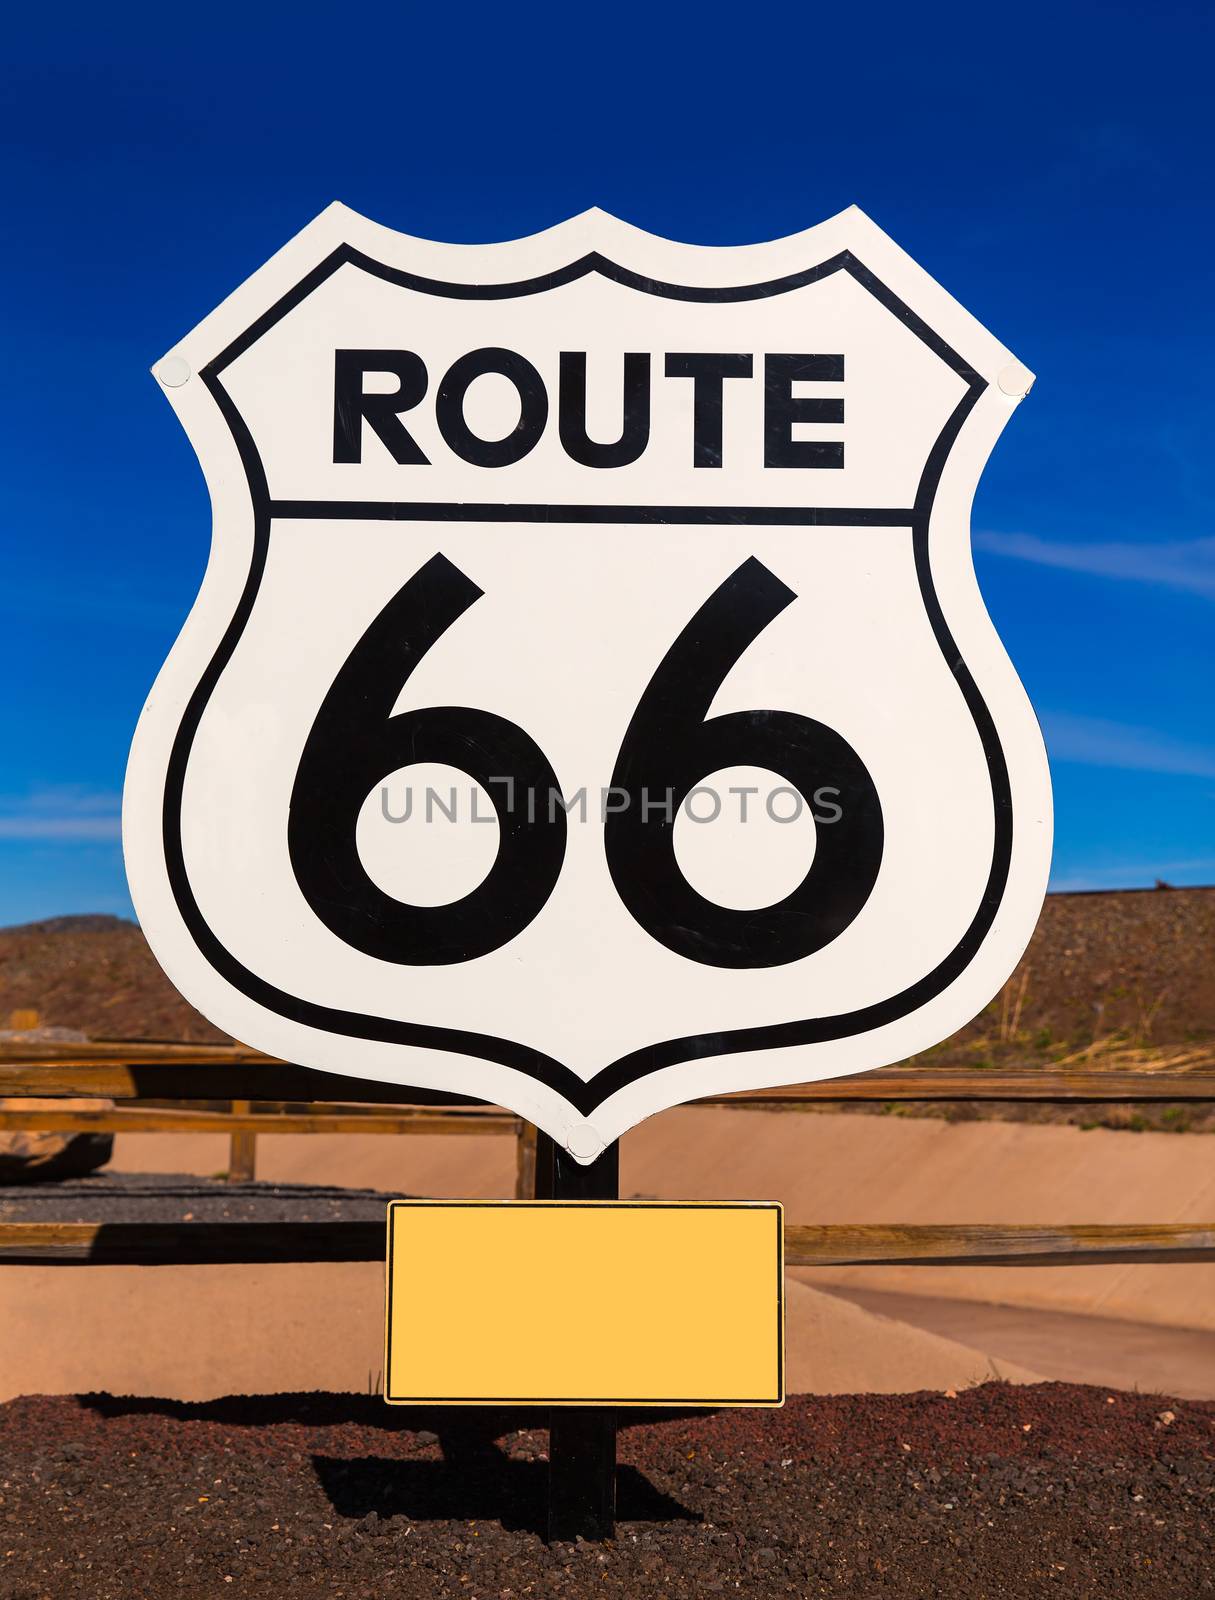 Route 66 road sign in Arizona USA by lunamarina